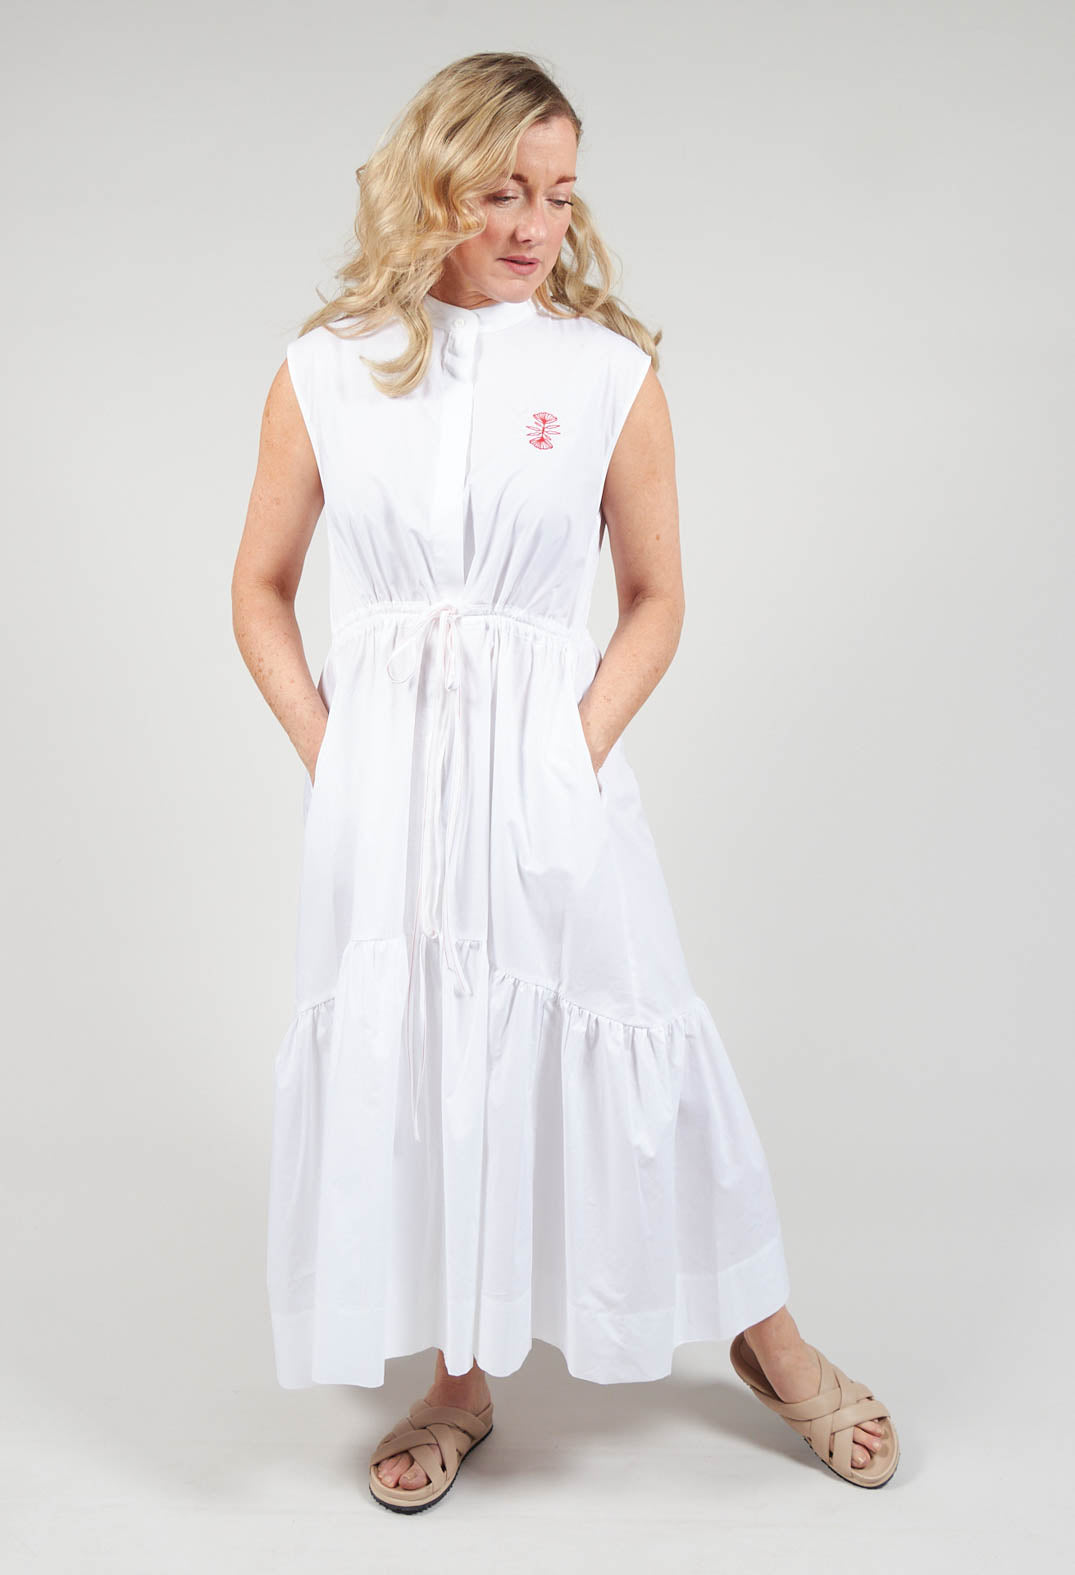 lady wearing Beatrice B sleeveless dress in white